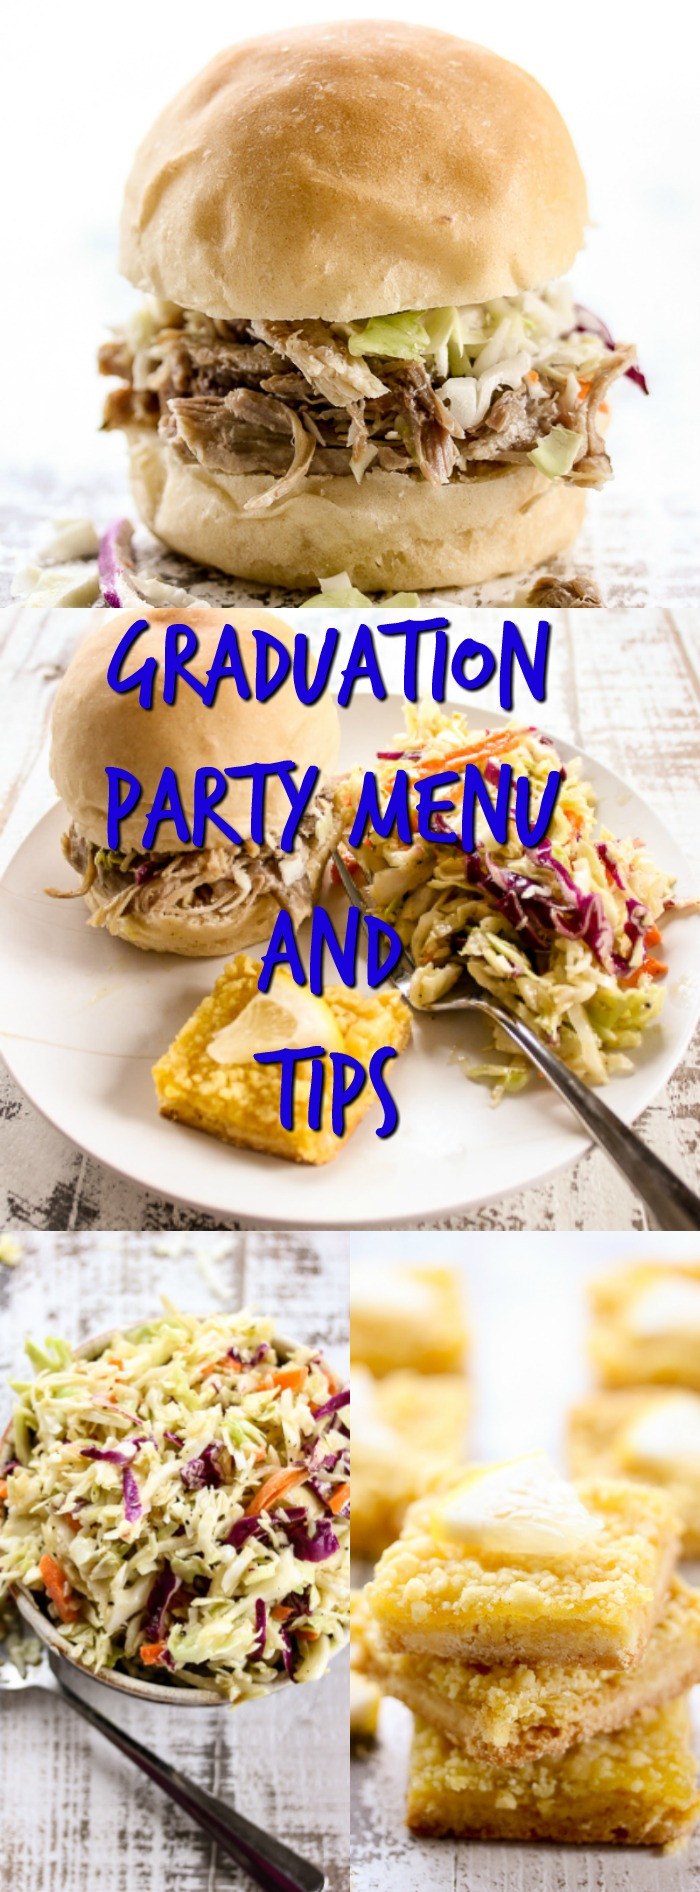 Graduation Open House Party Ideas
 Graduation Party Menu and Tips Lisa s Dinnertime Dish